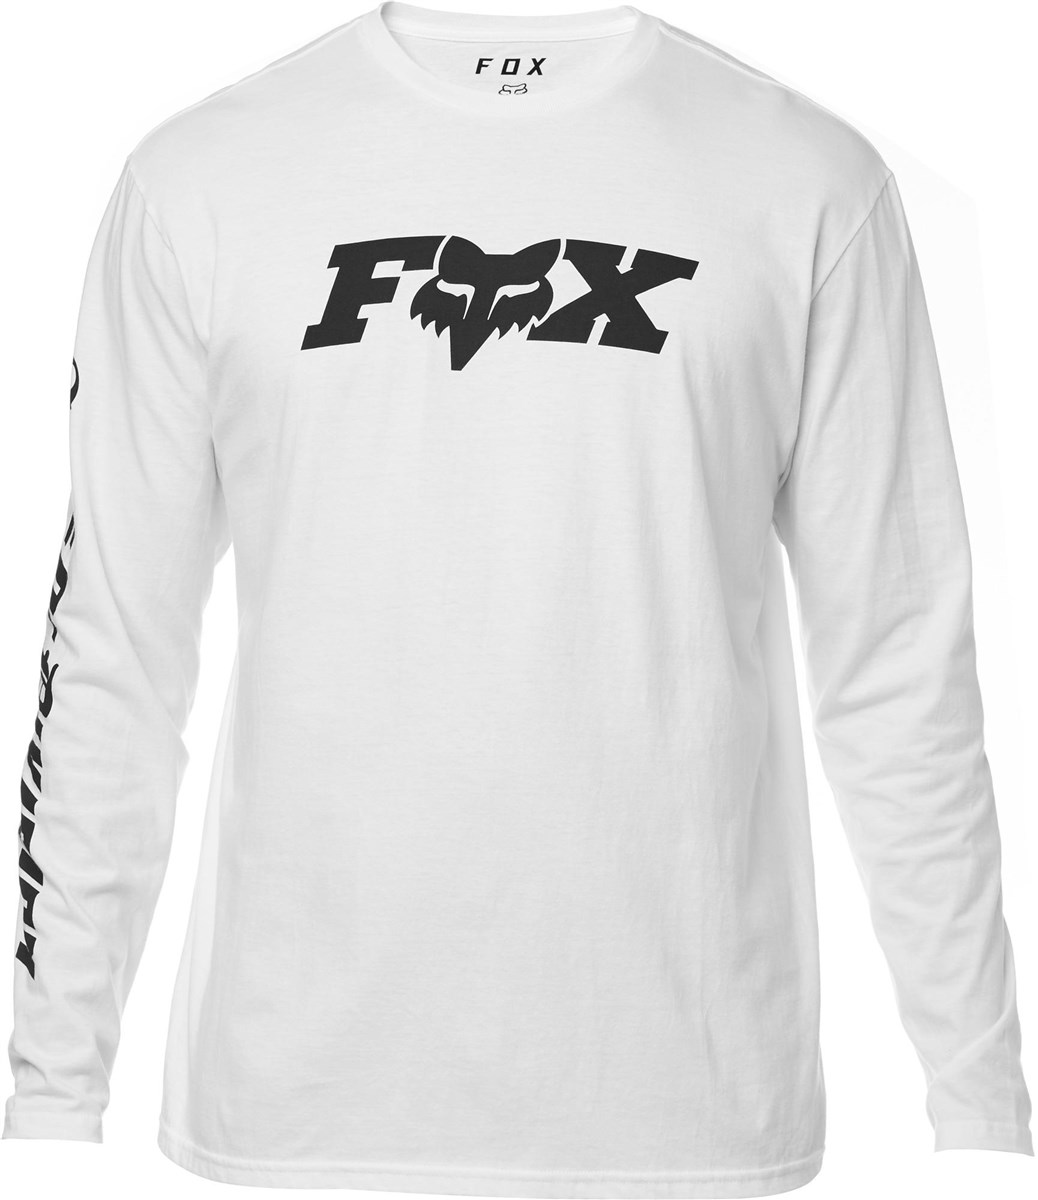 Fox Clothing Race Team Long Sleeve Tee product image